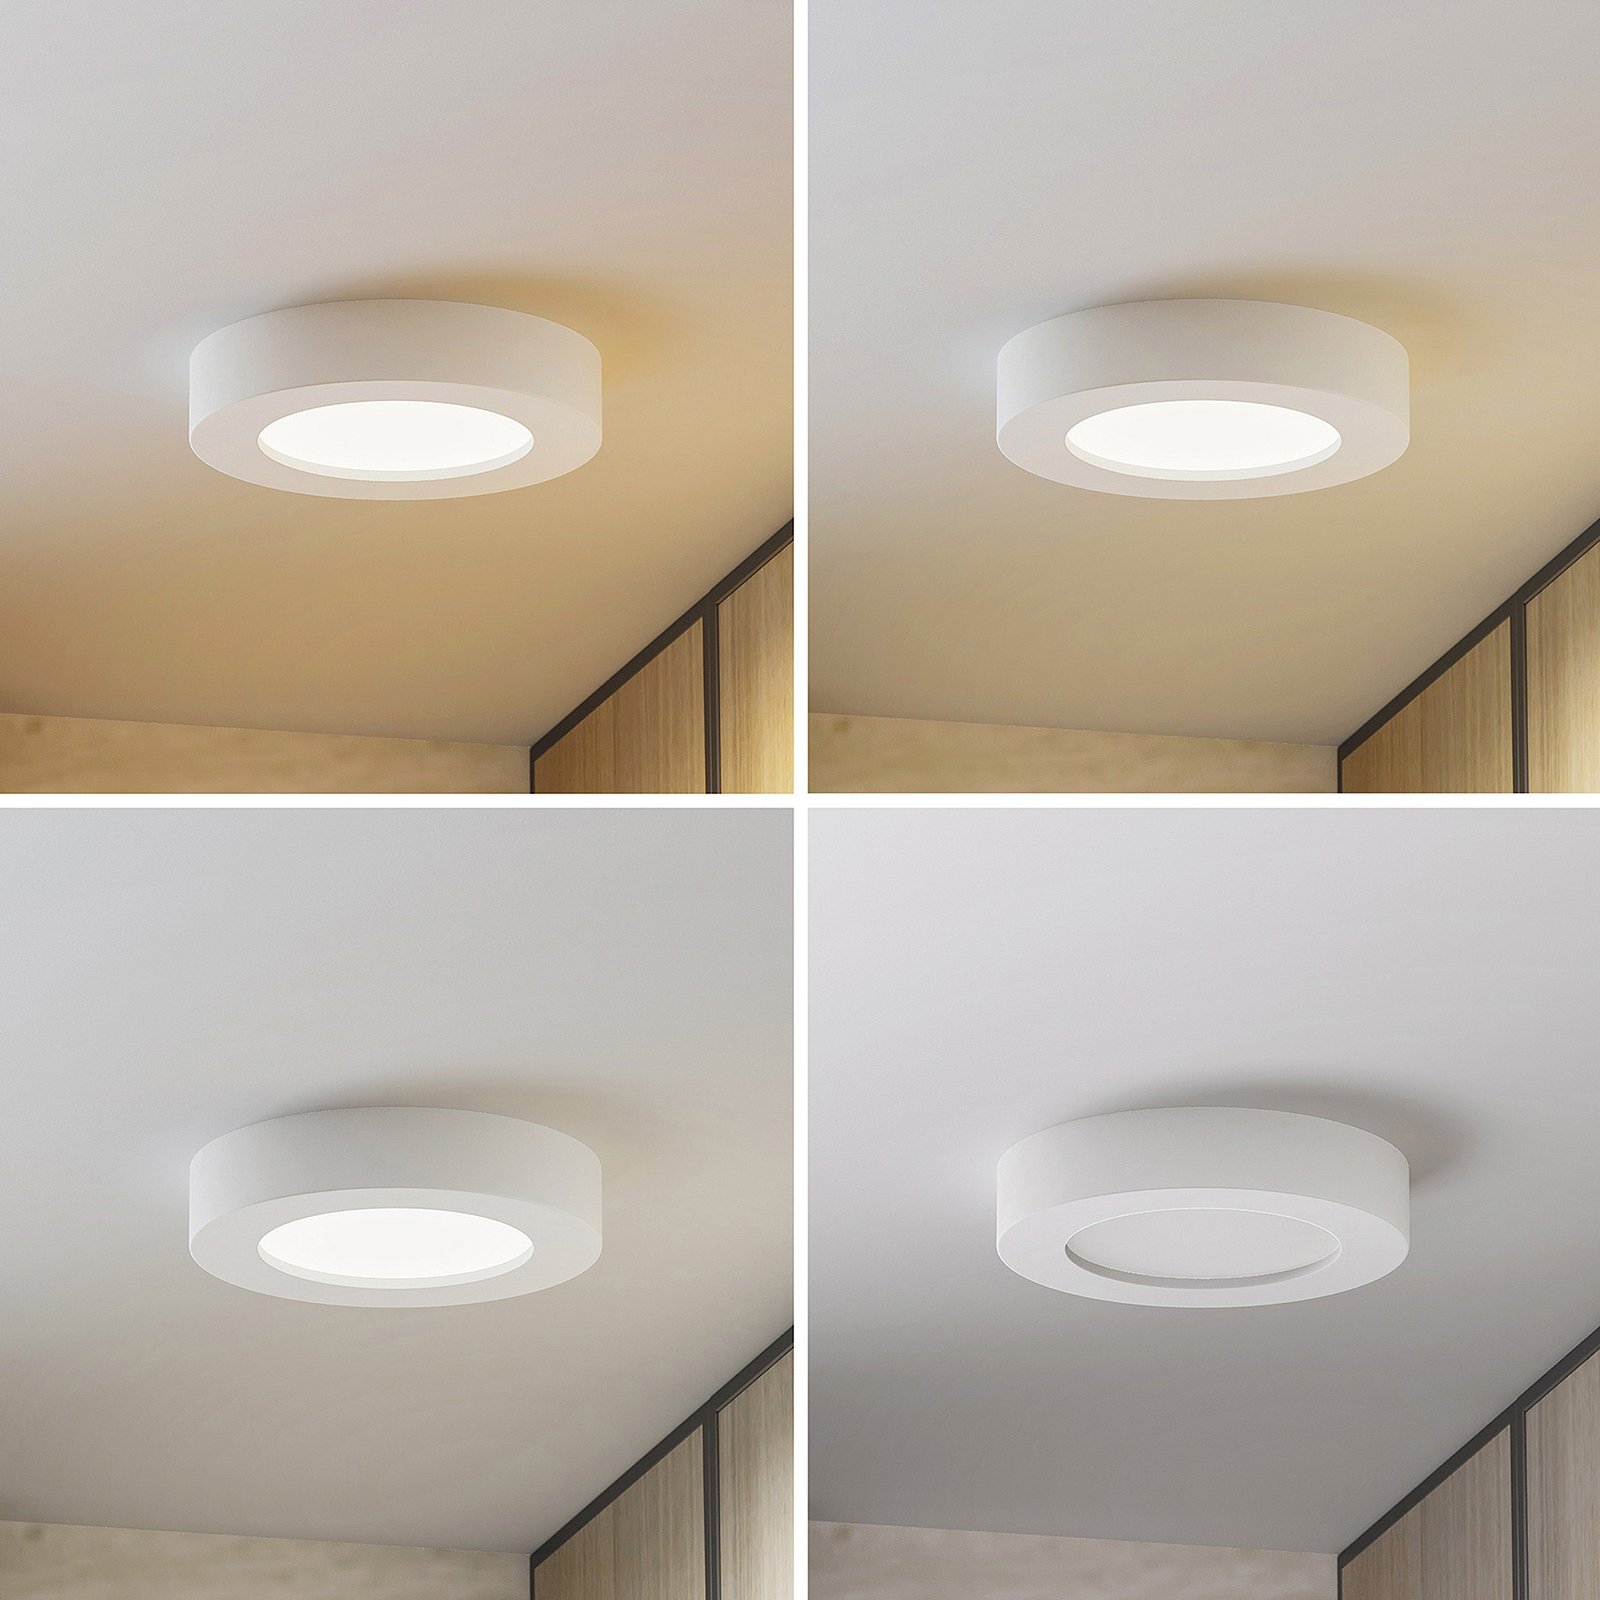 Prios Edwina LED ceiling light, white, 17.7 cm